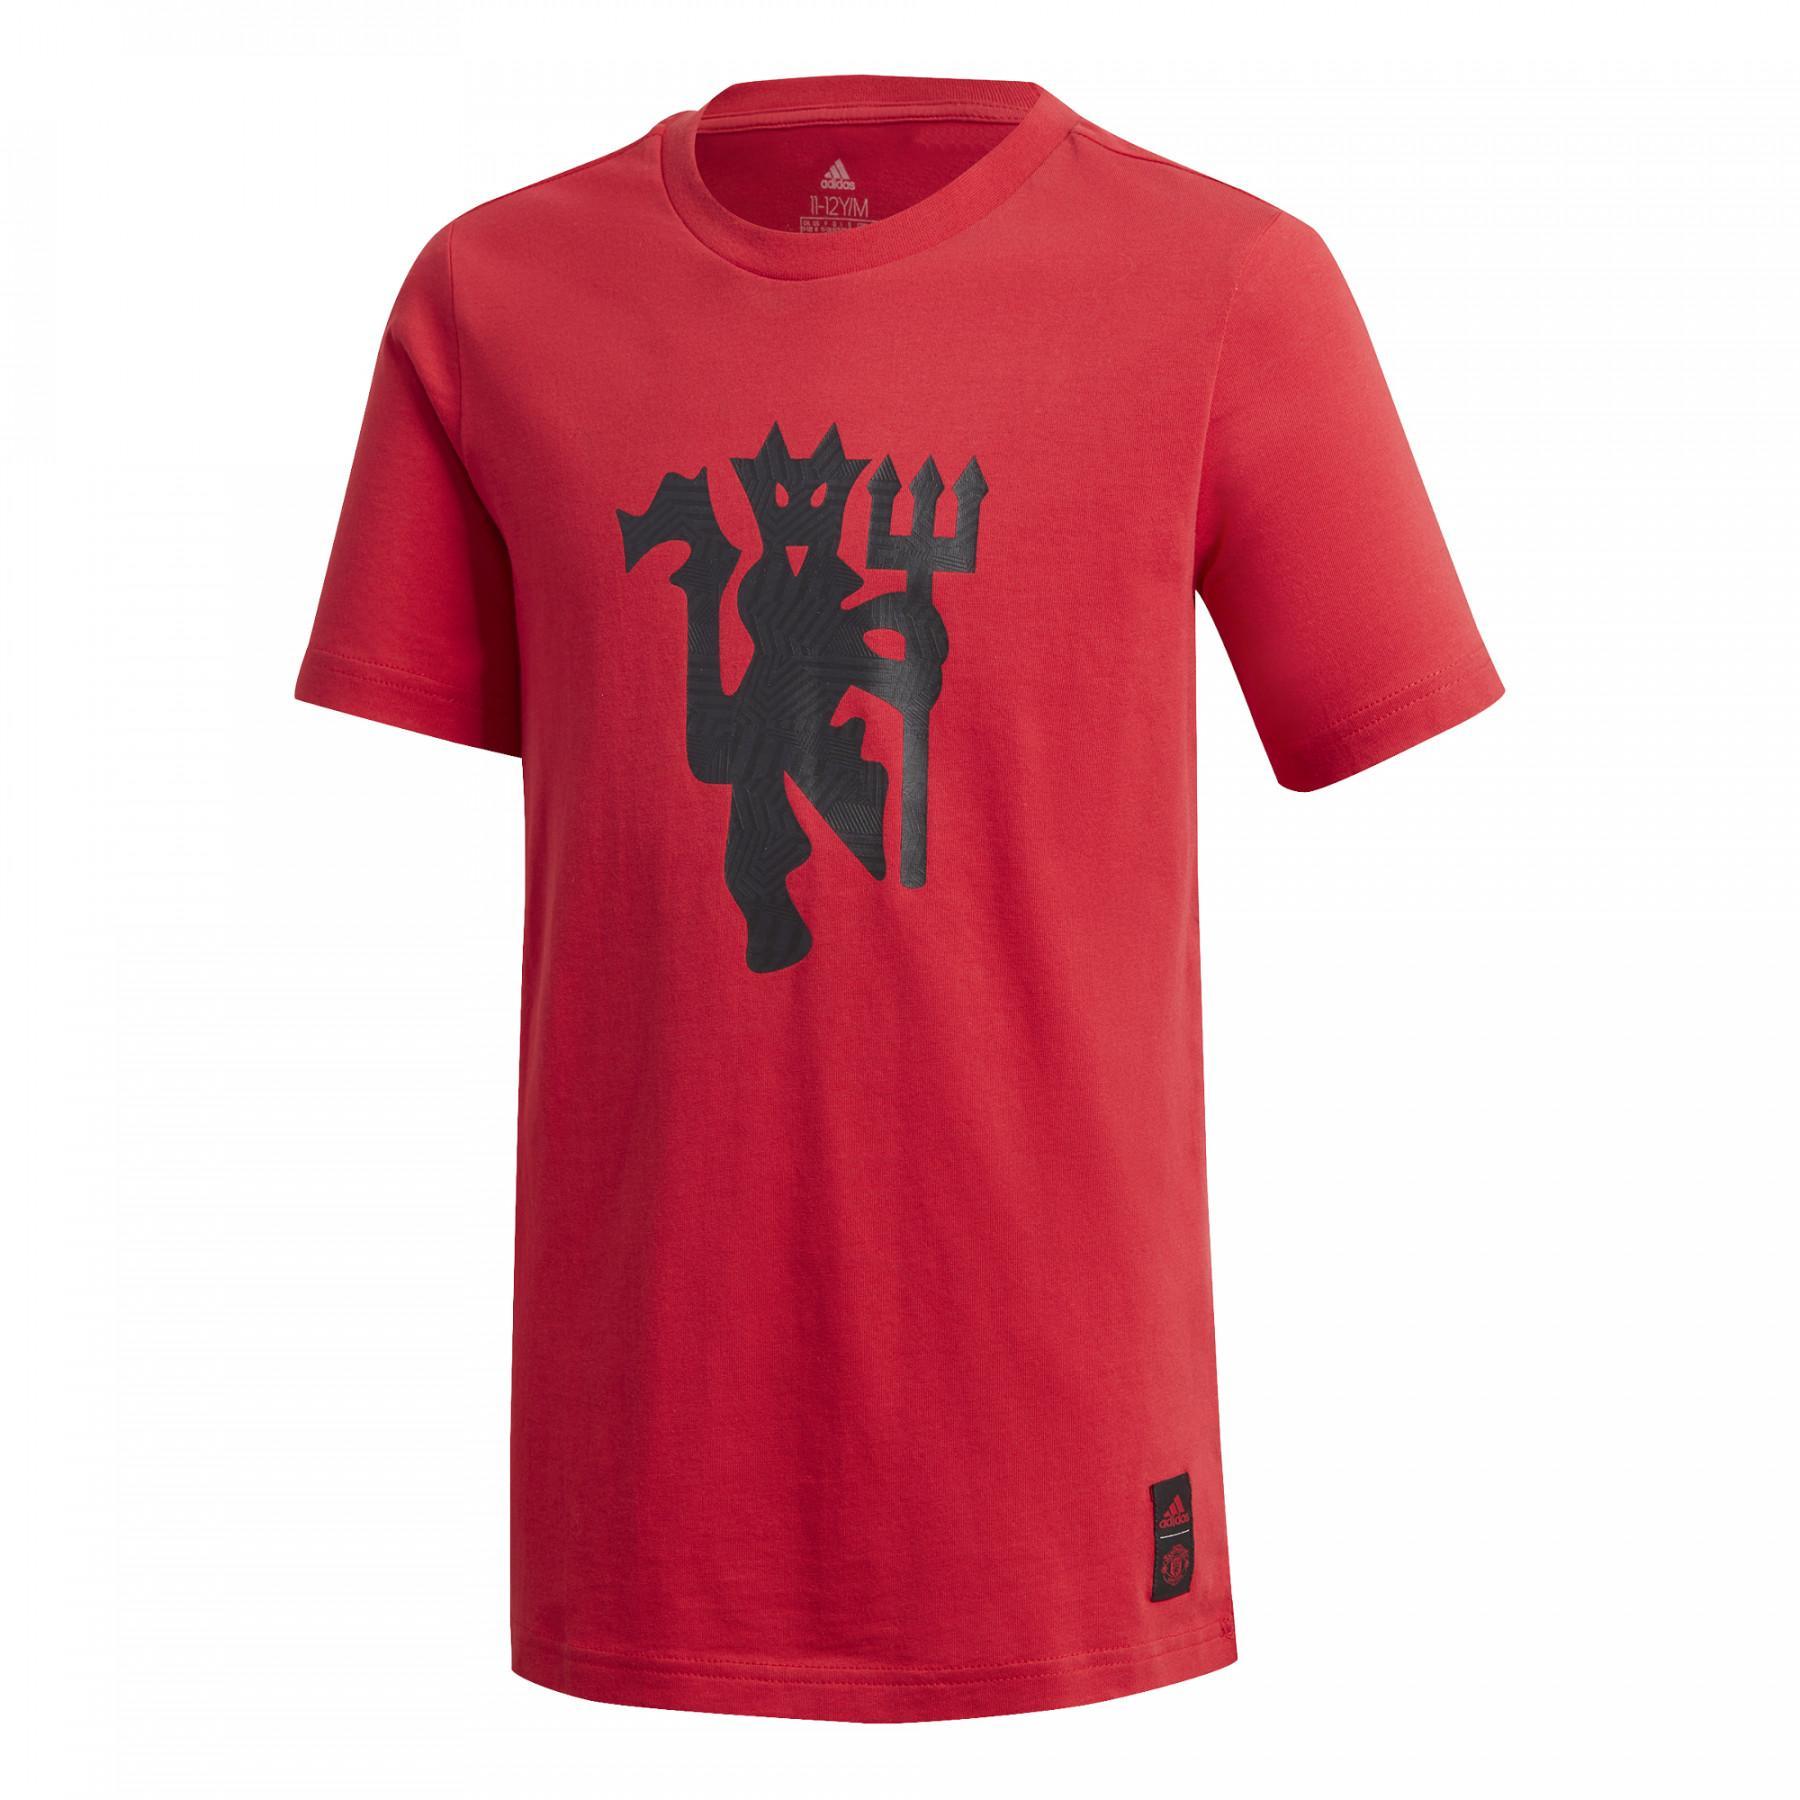 Child's T-shirt Manchester United Graphic 2020/21